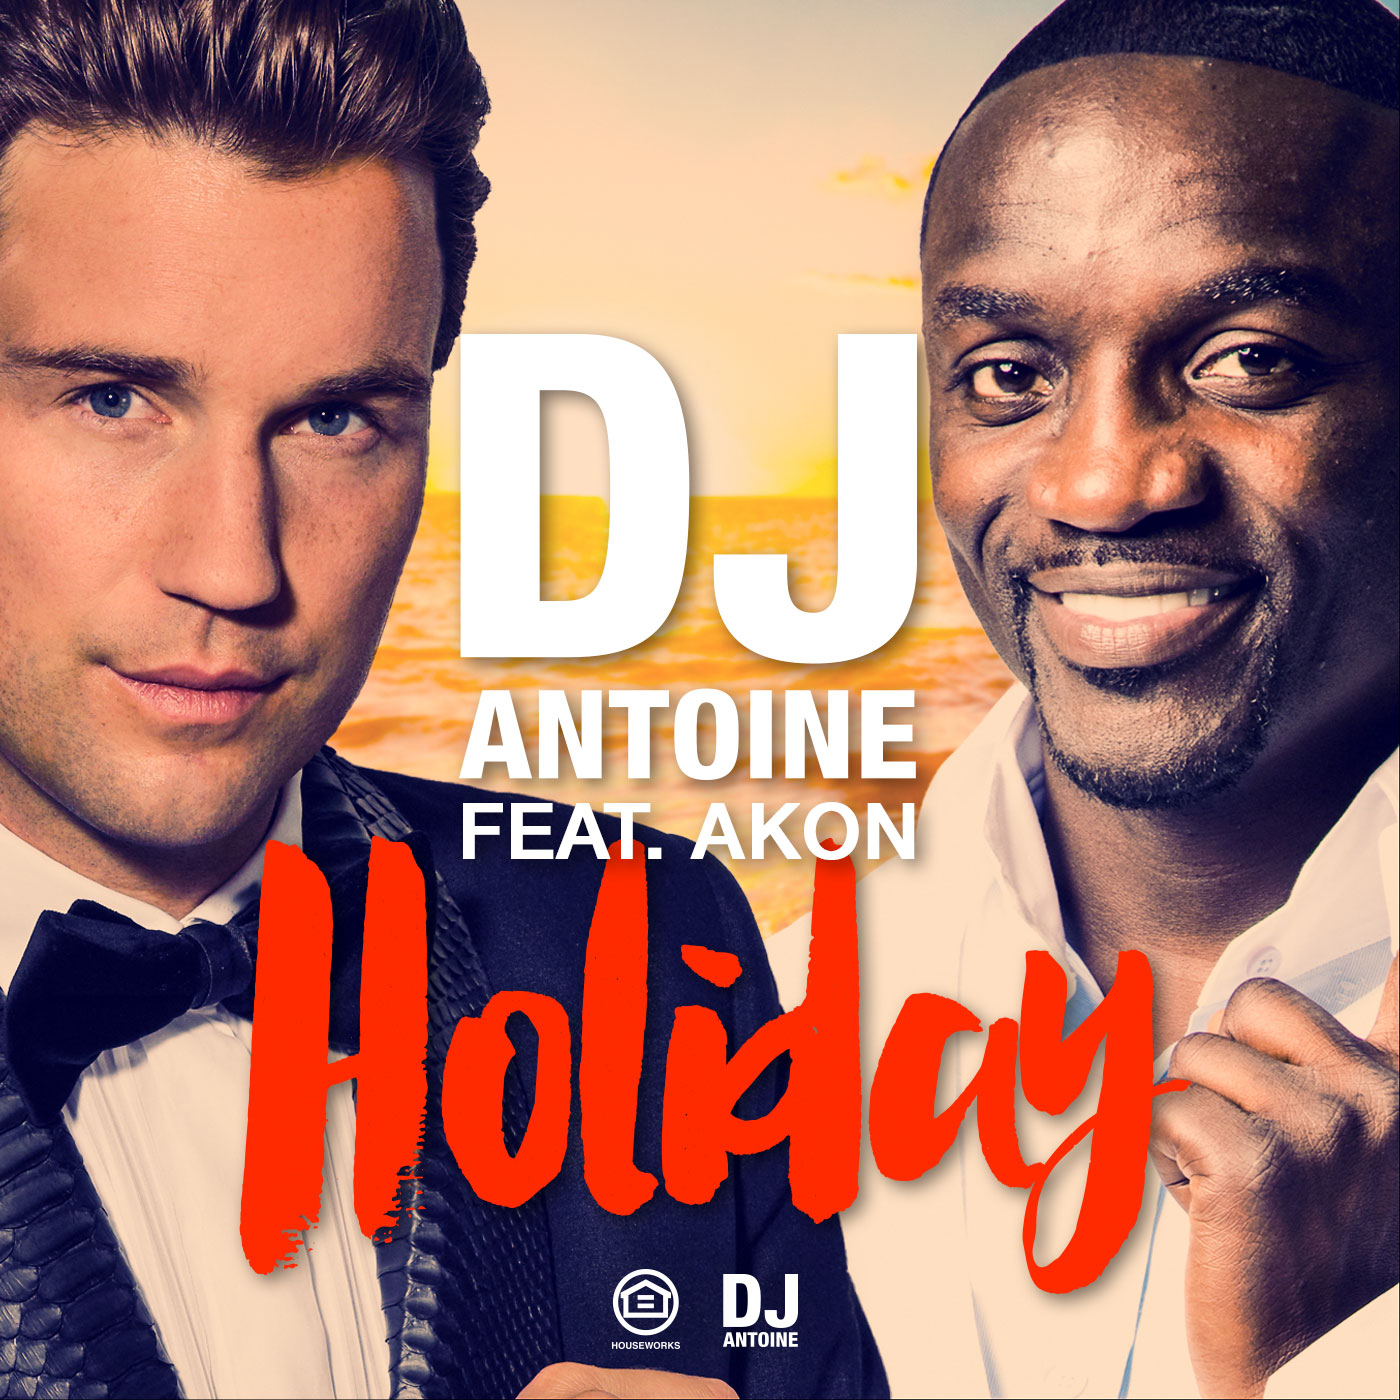 DJ Antoine feat. Akon - Holiday - Cover - ROW